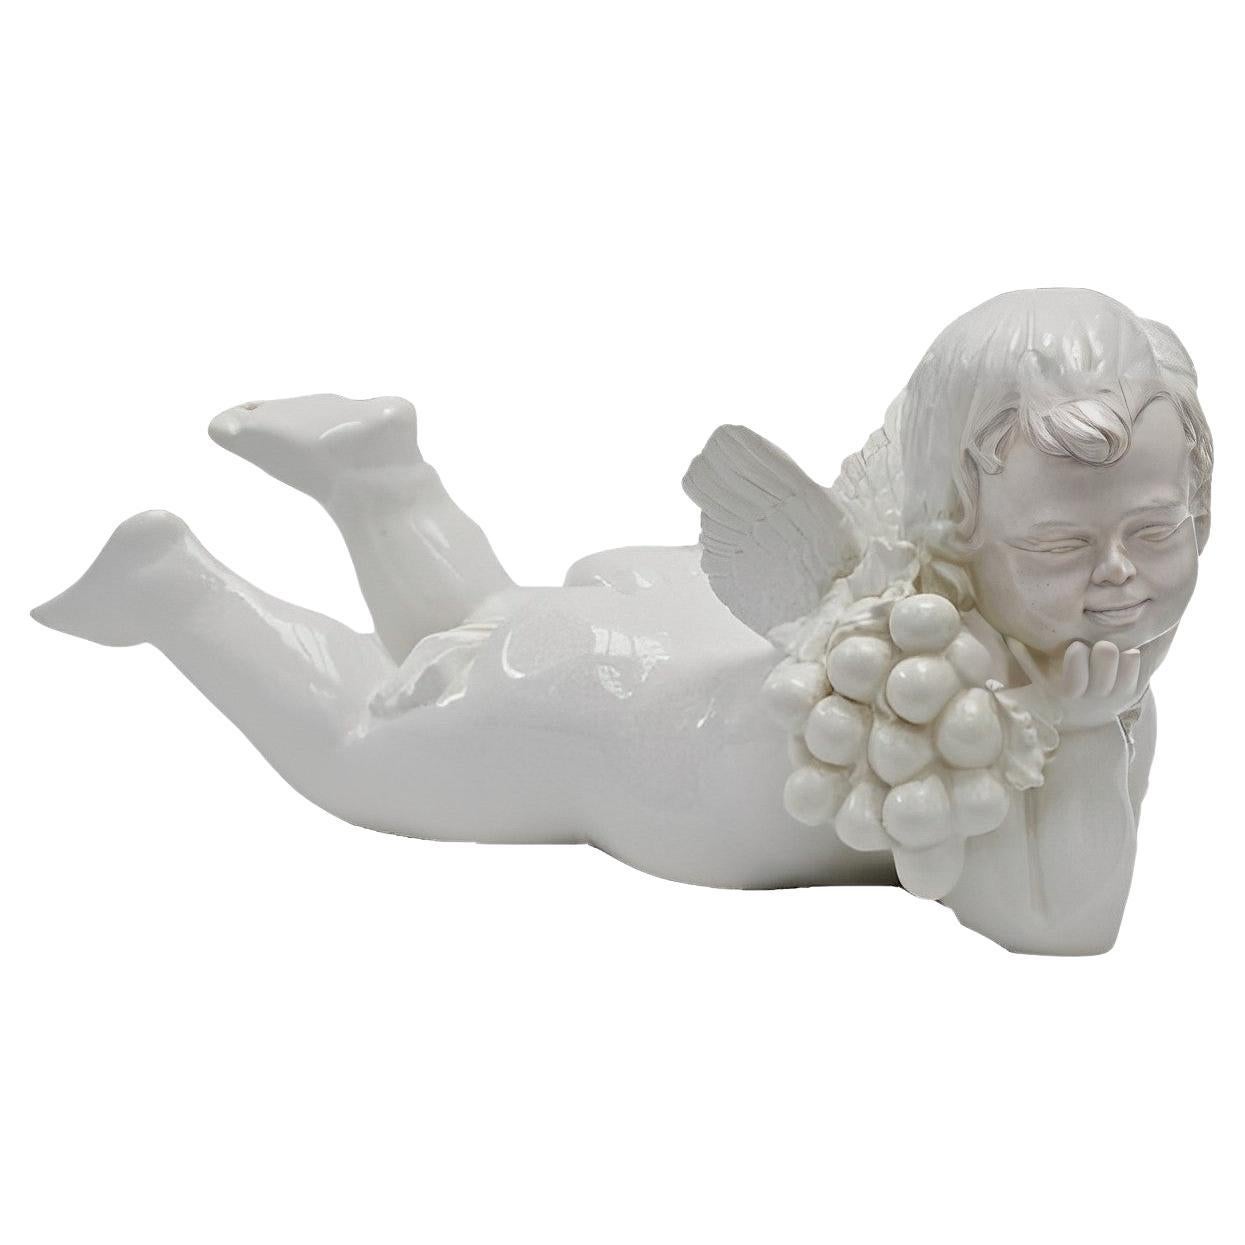 Vietri Italian Large White Crackle Glazed Ceramic Cherub Figurine For Sale